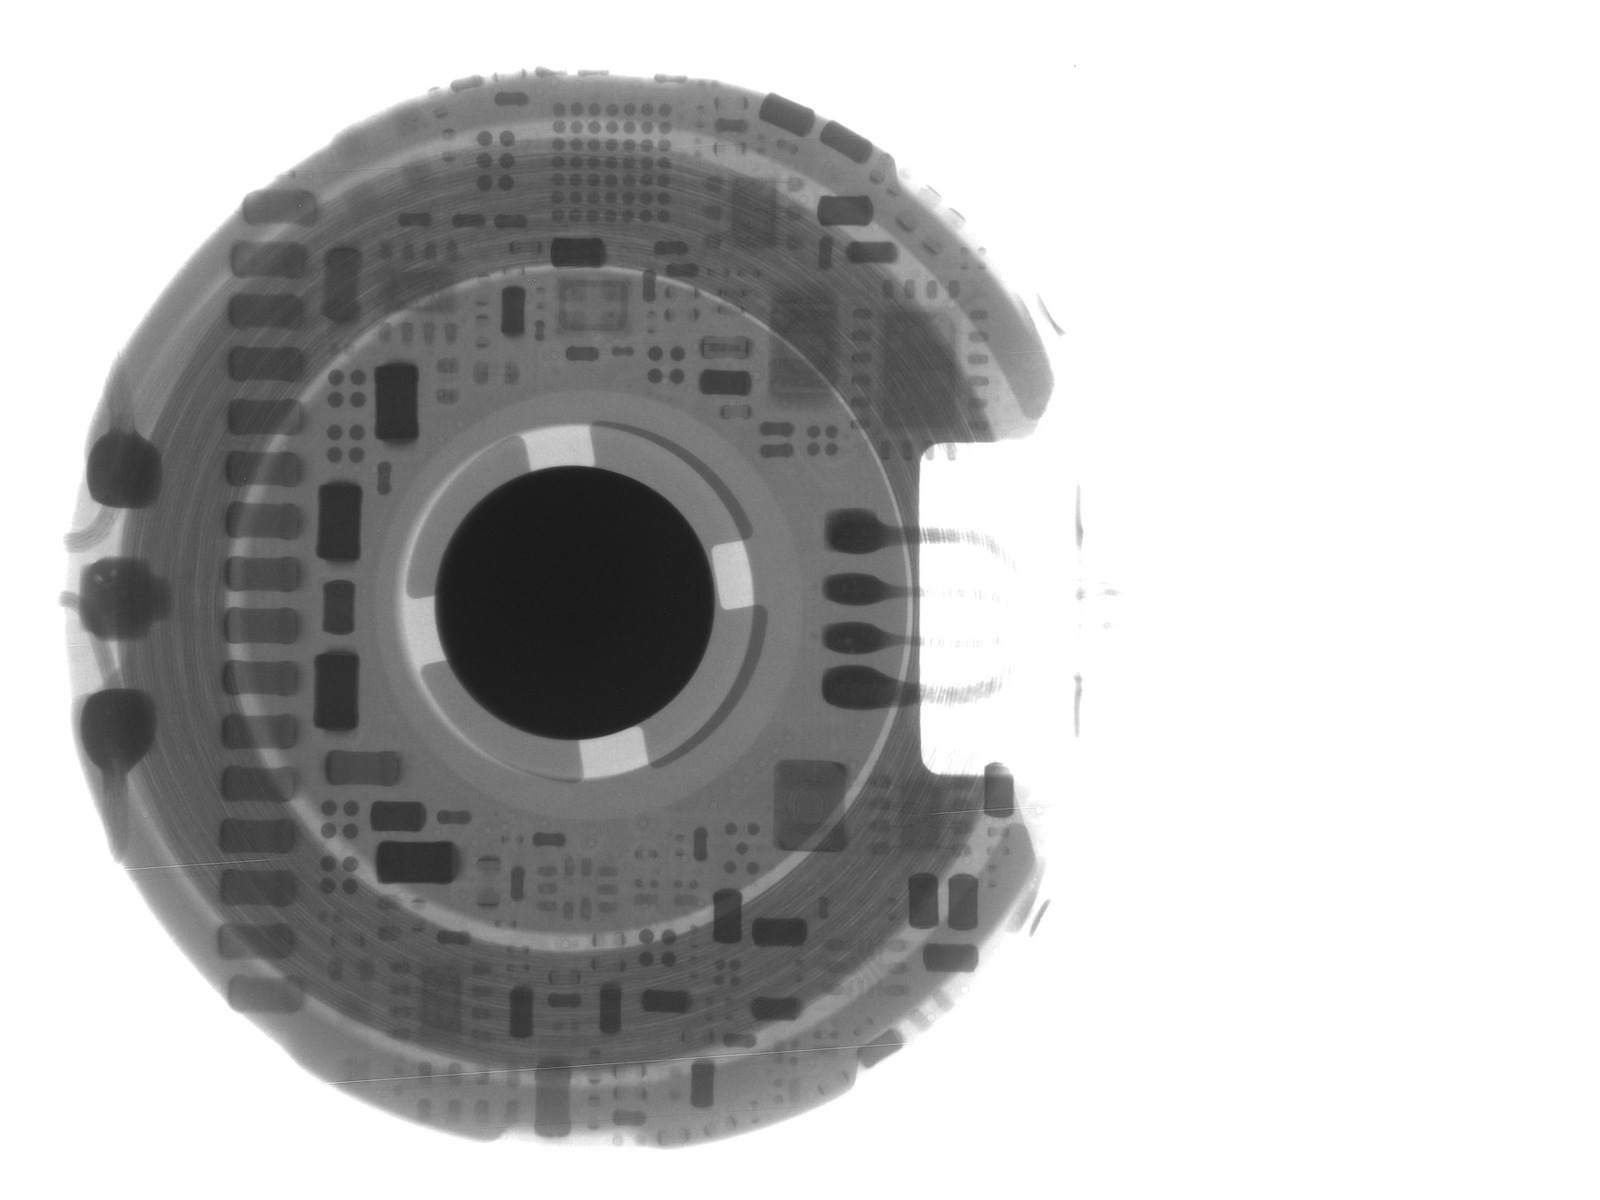 chip S1 Apple Watch scansionato ai raggi X 2 - iDevice.ro